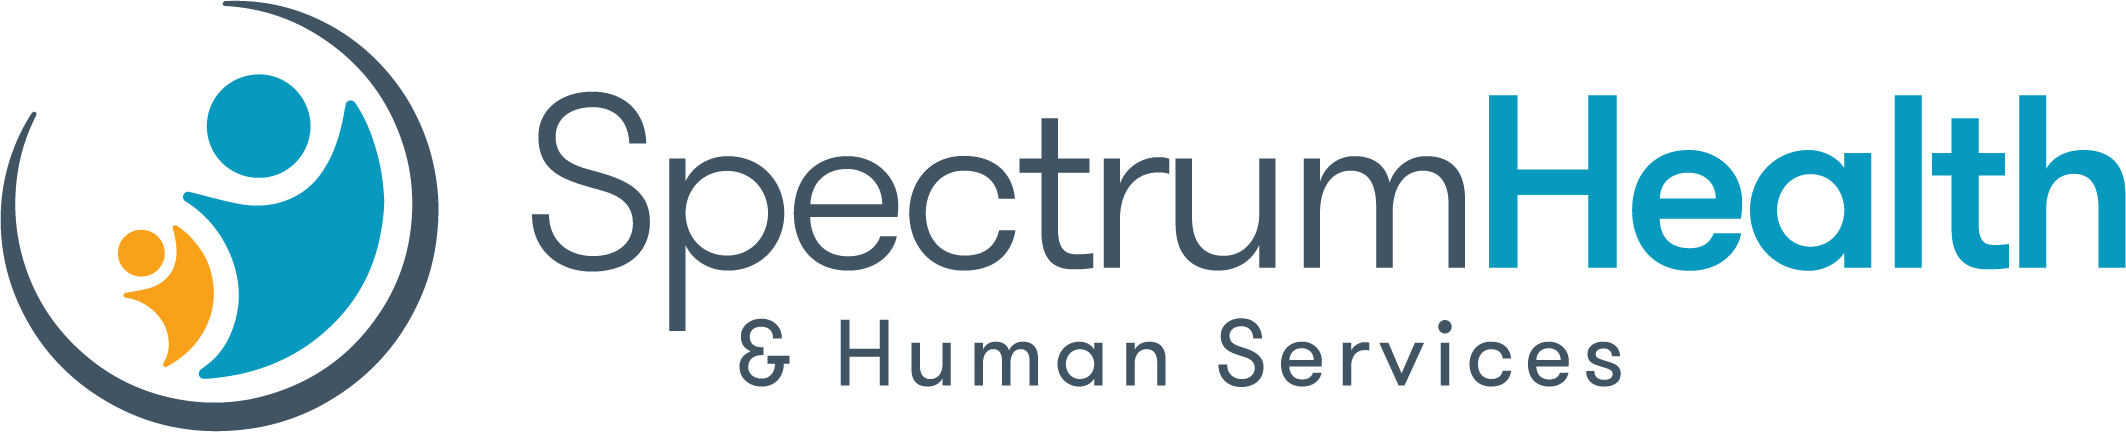 Spectrum Health & Human Services Company Logo